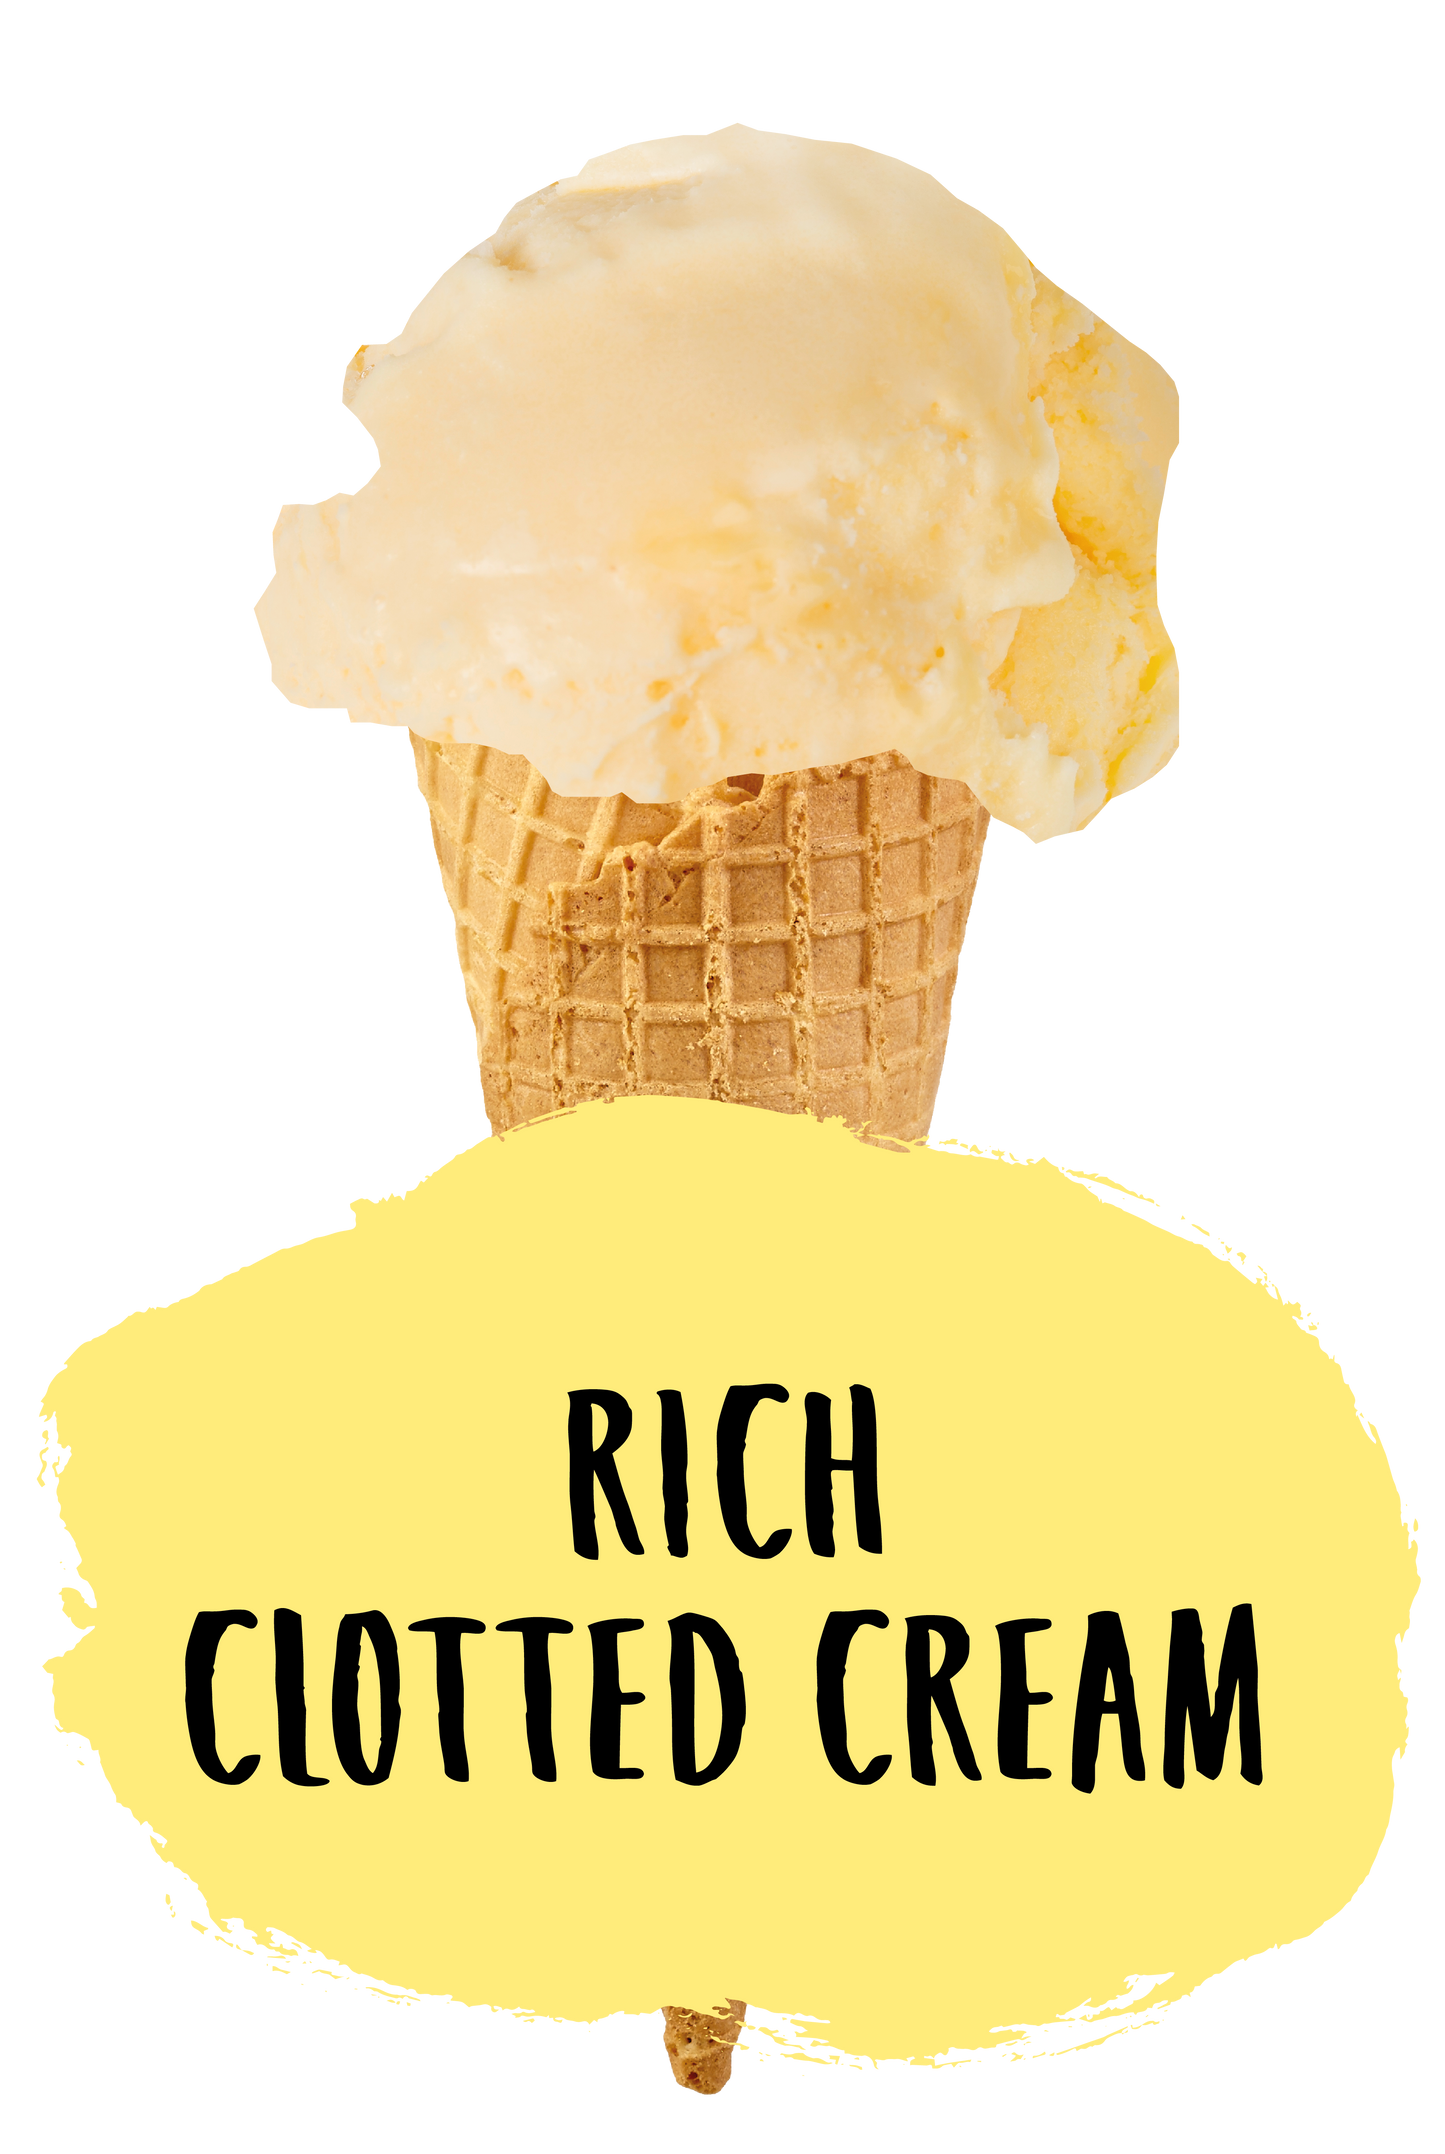 Marshfield Farm Rich Clotted Cream Ice Cream